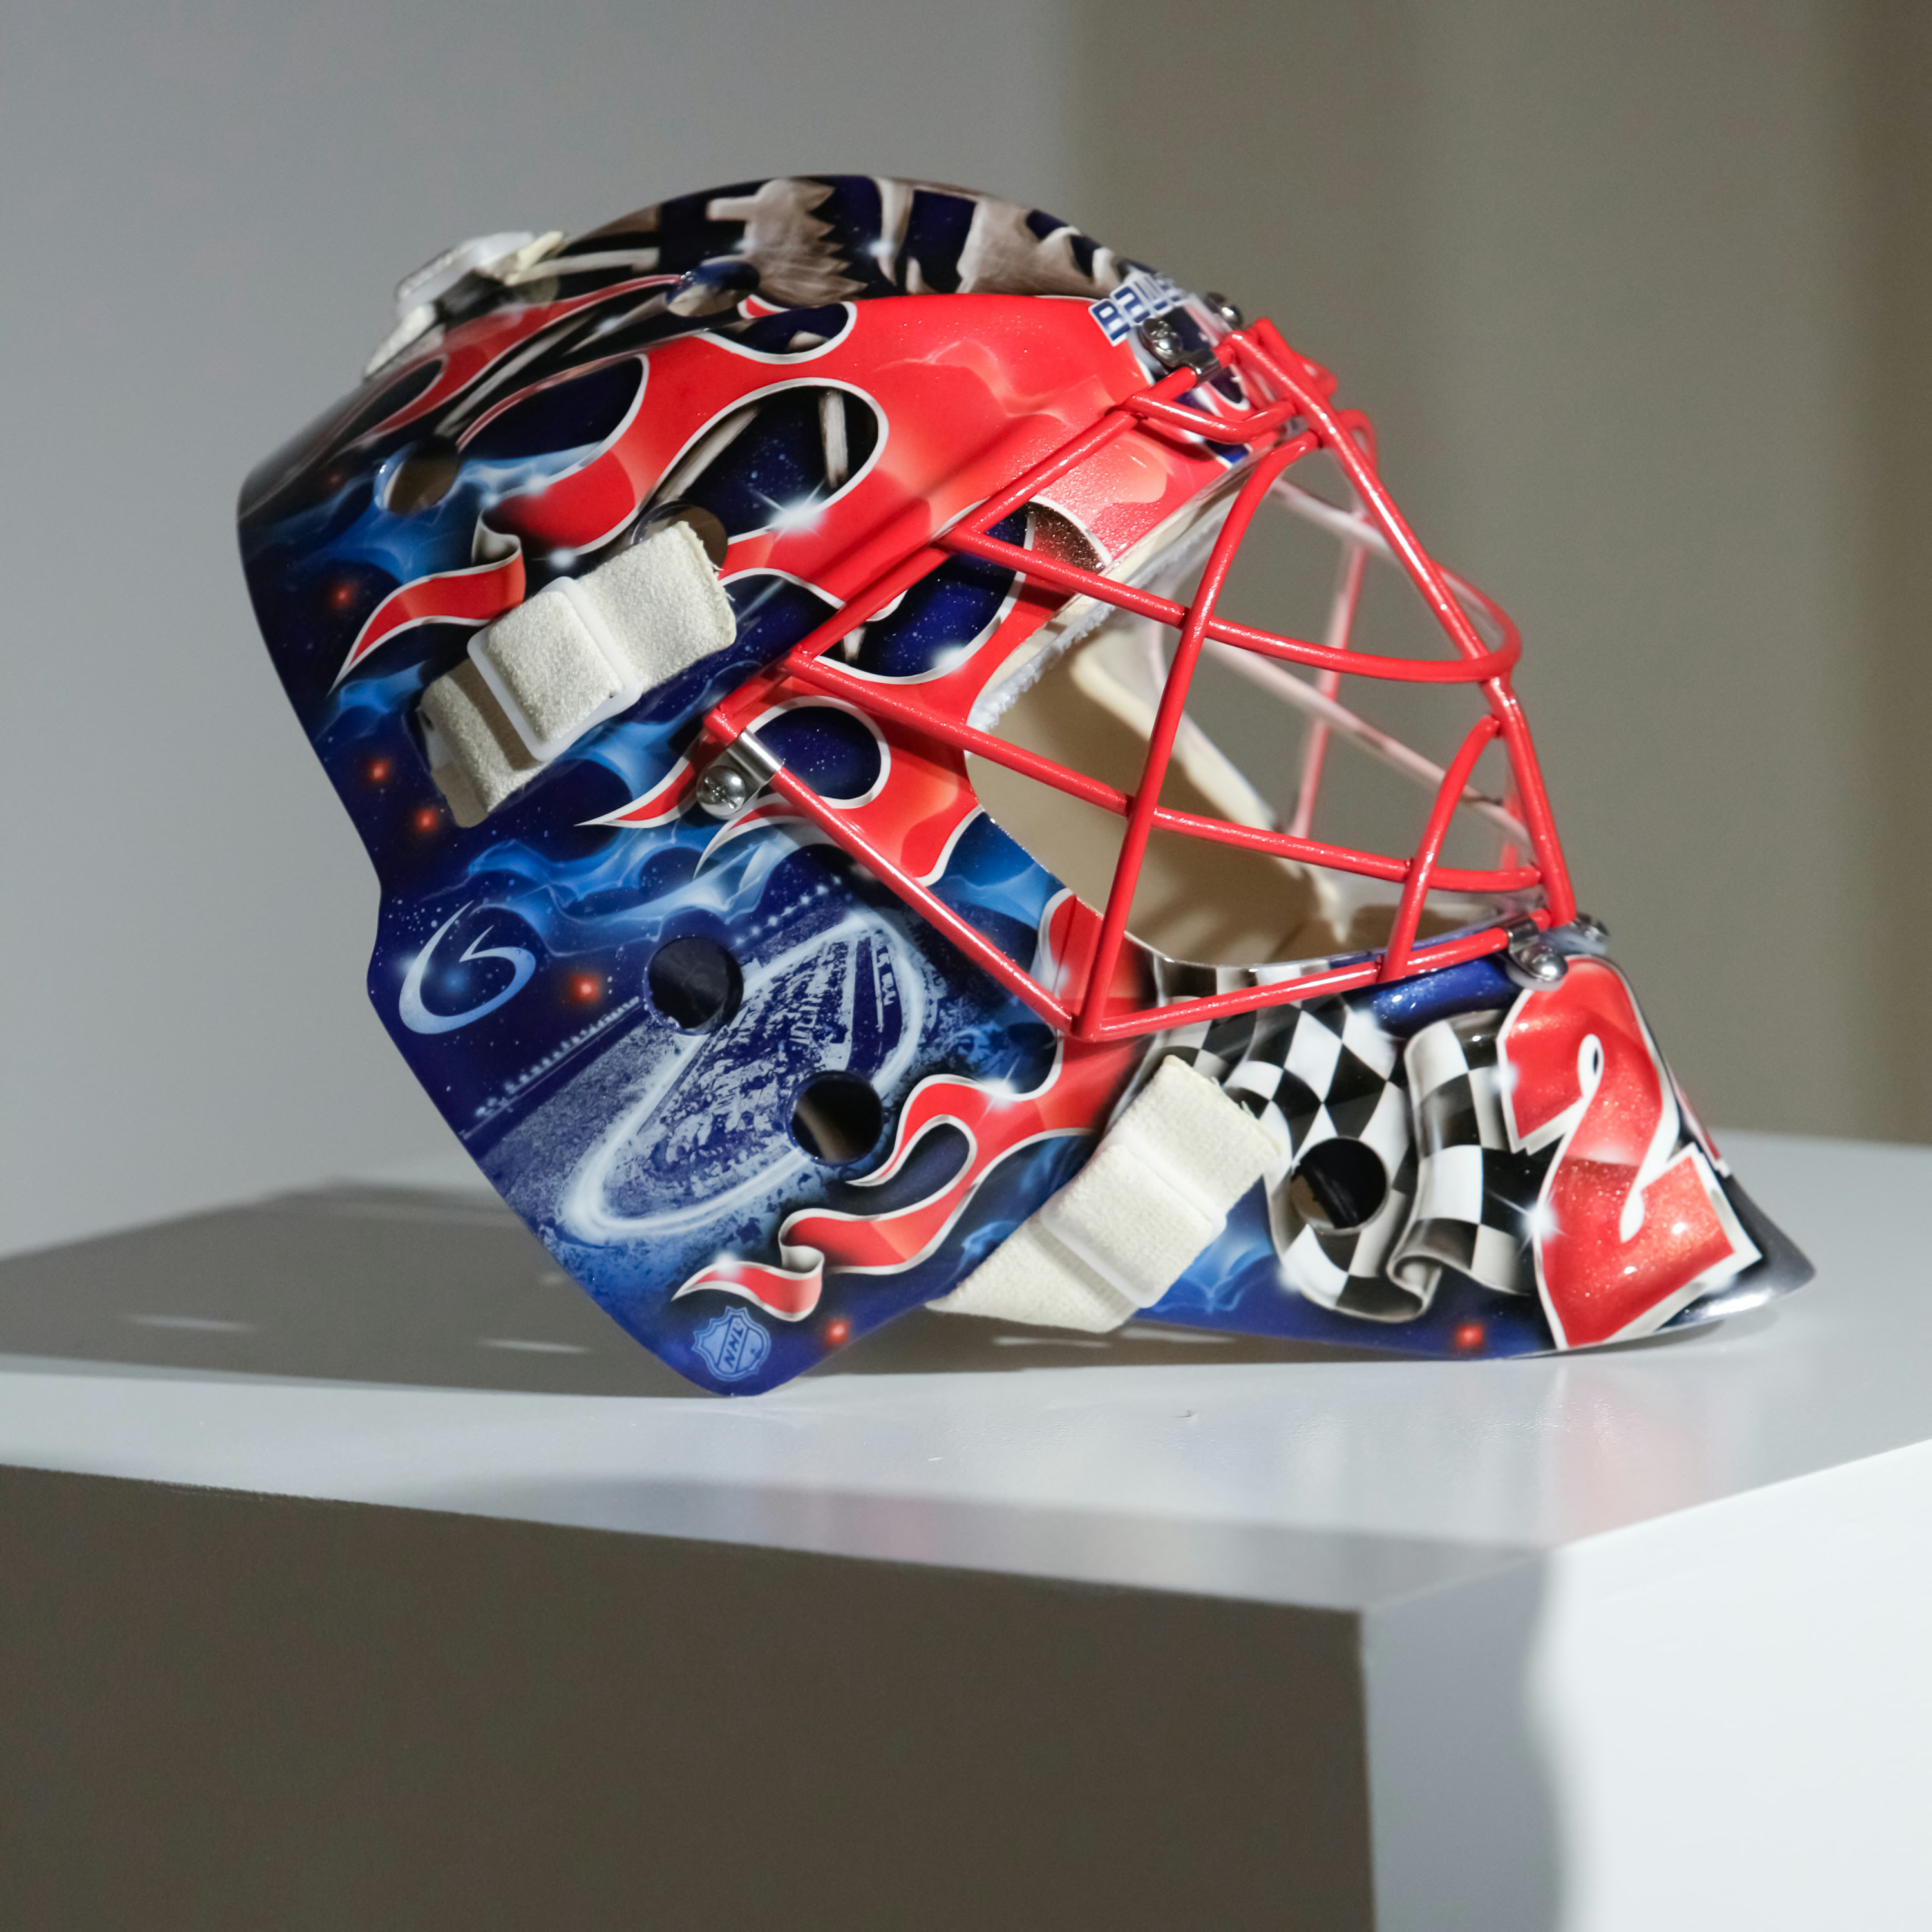 The many masks of Rangers goalie Henrik Lundqvist